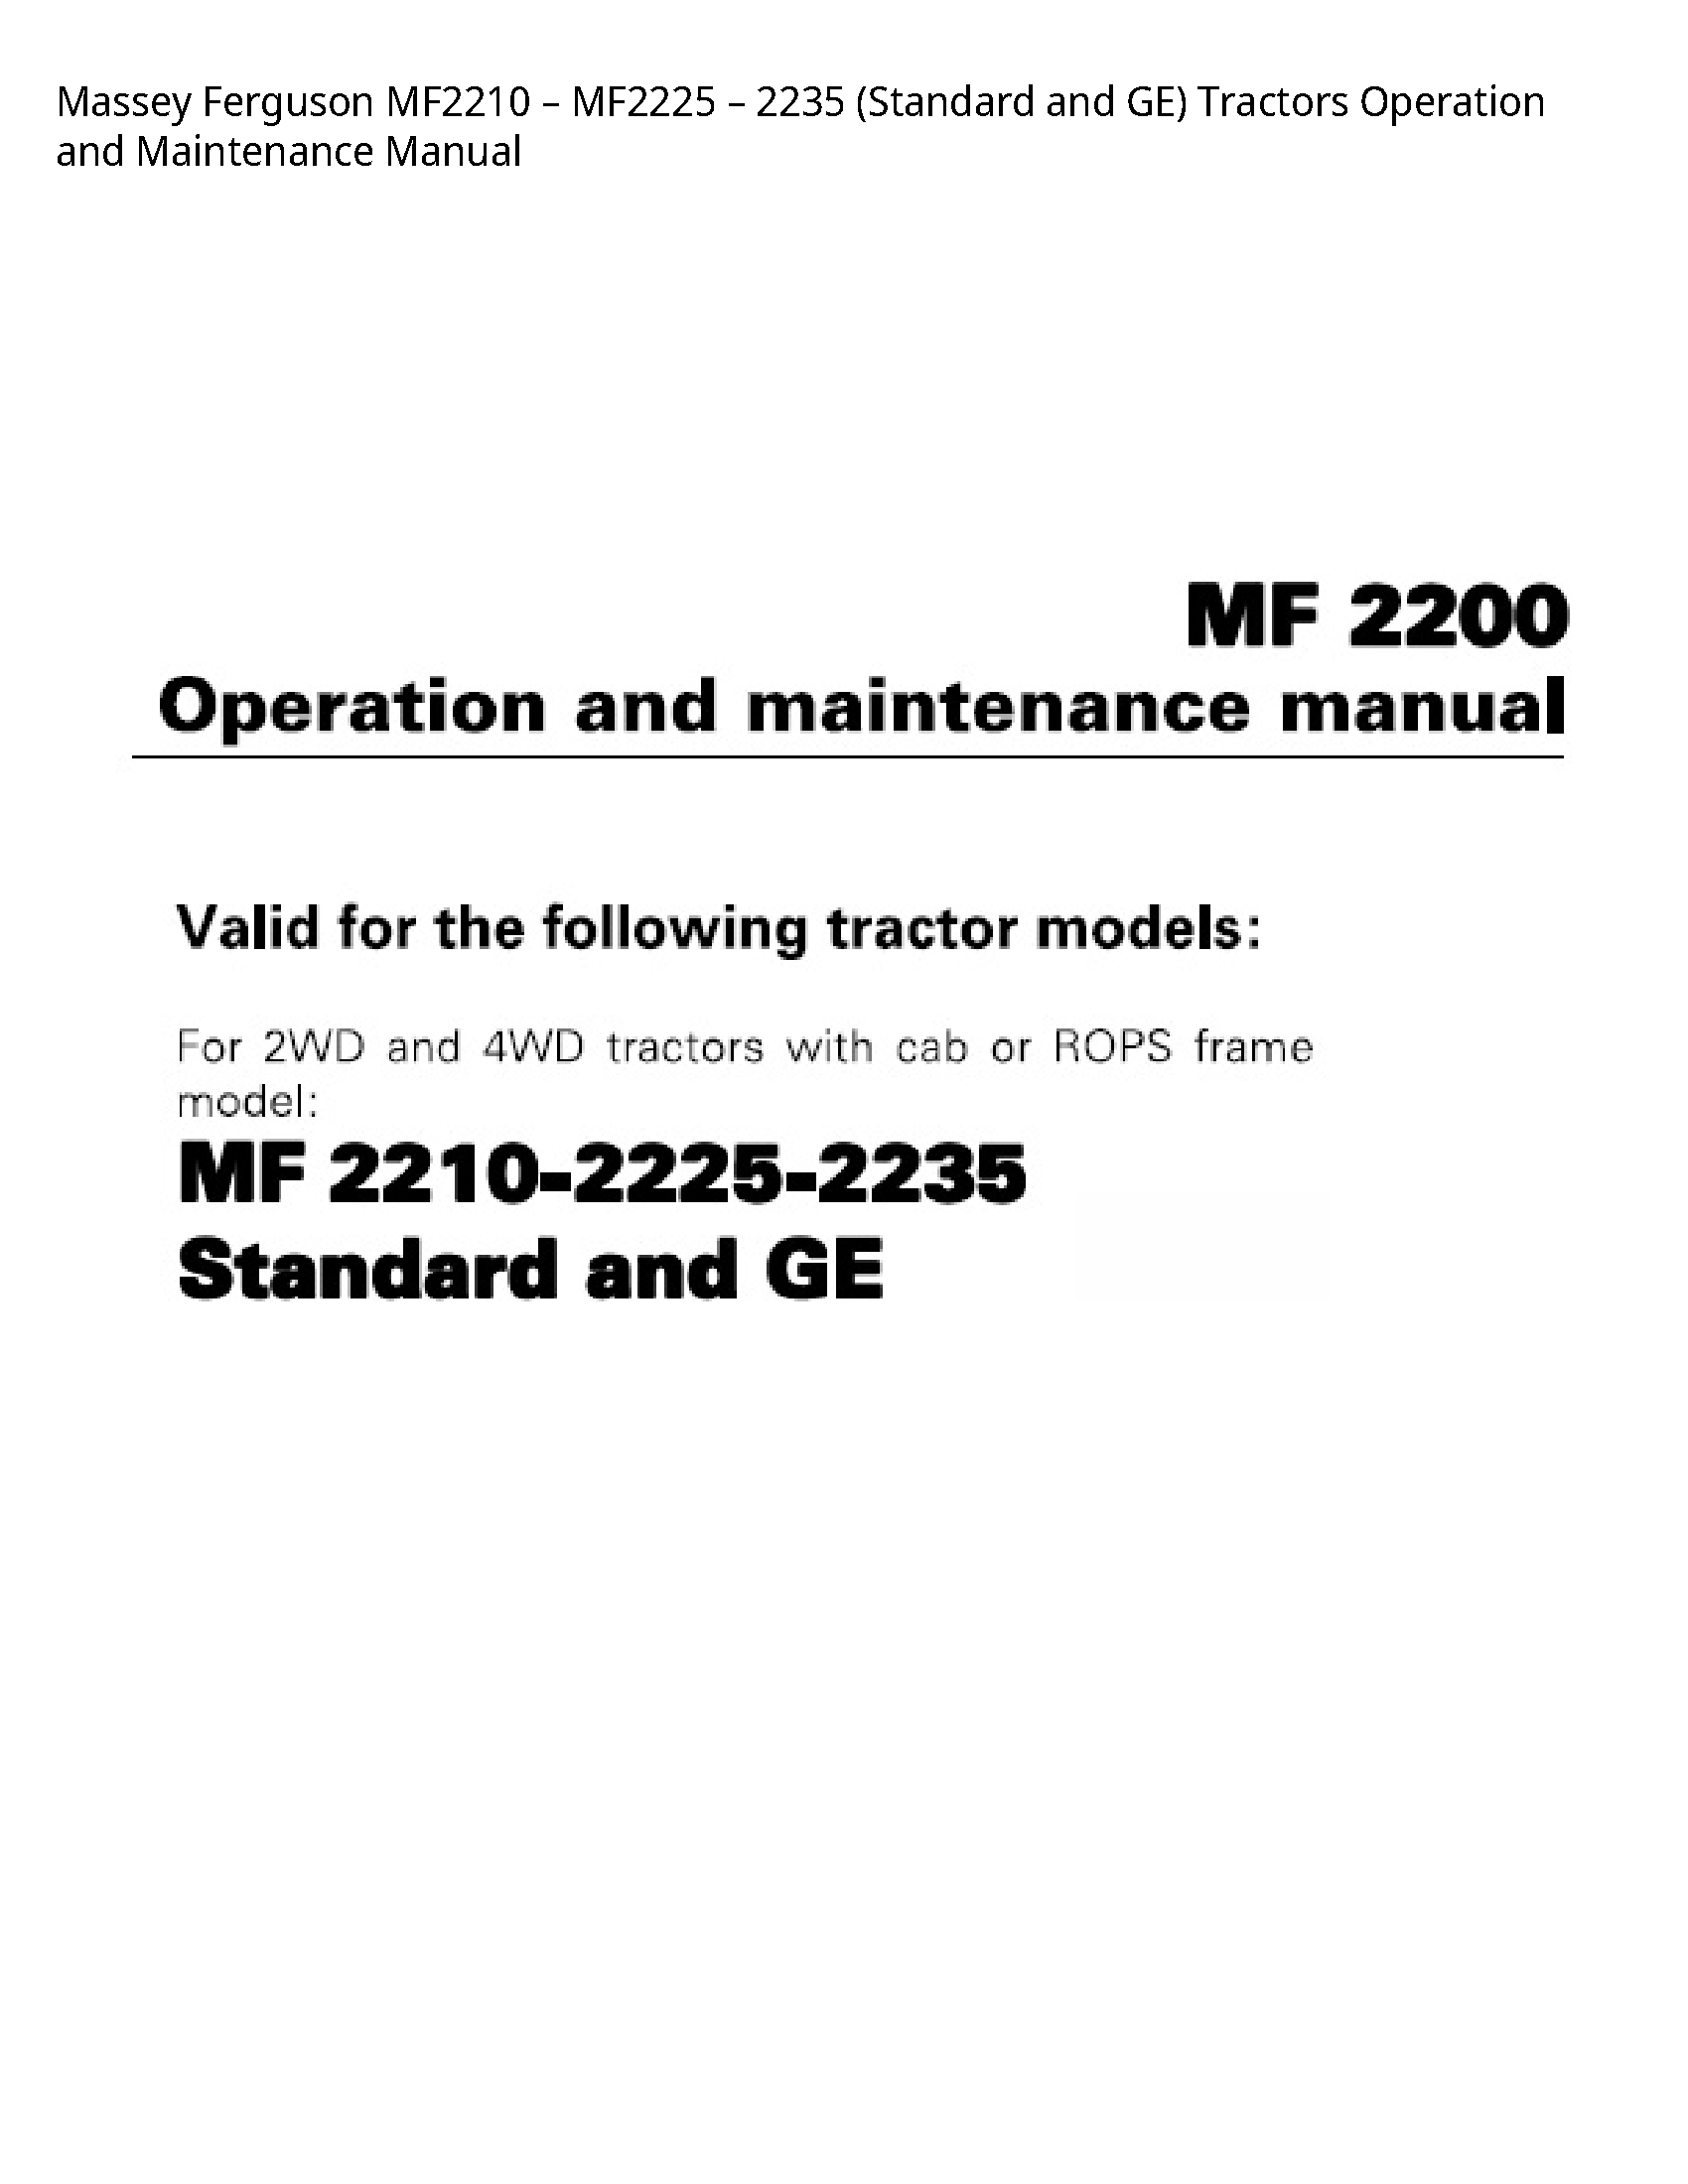 Massey Ferguson MF2210 (Standard  GE) Tractors Operation  Maintenance manual